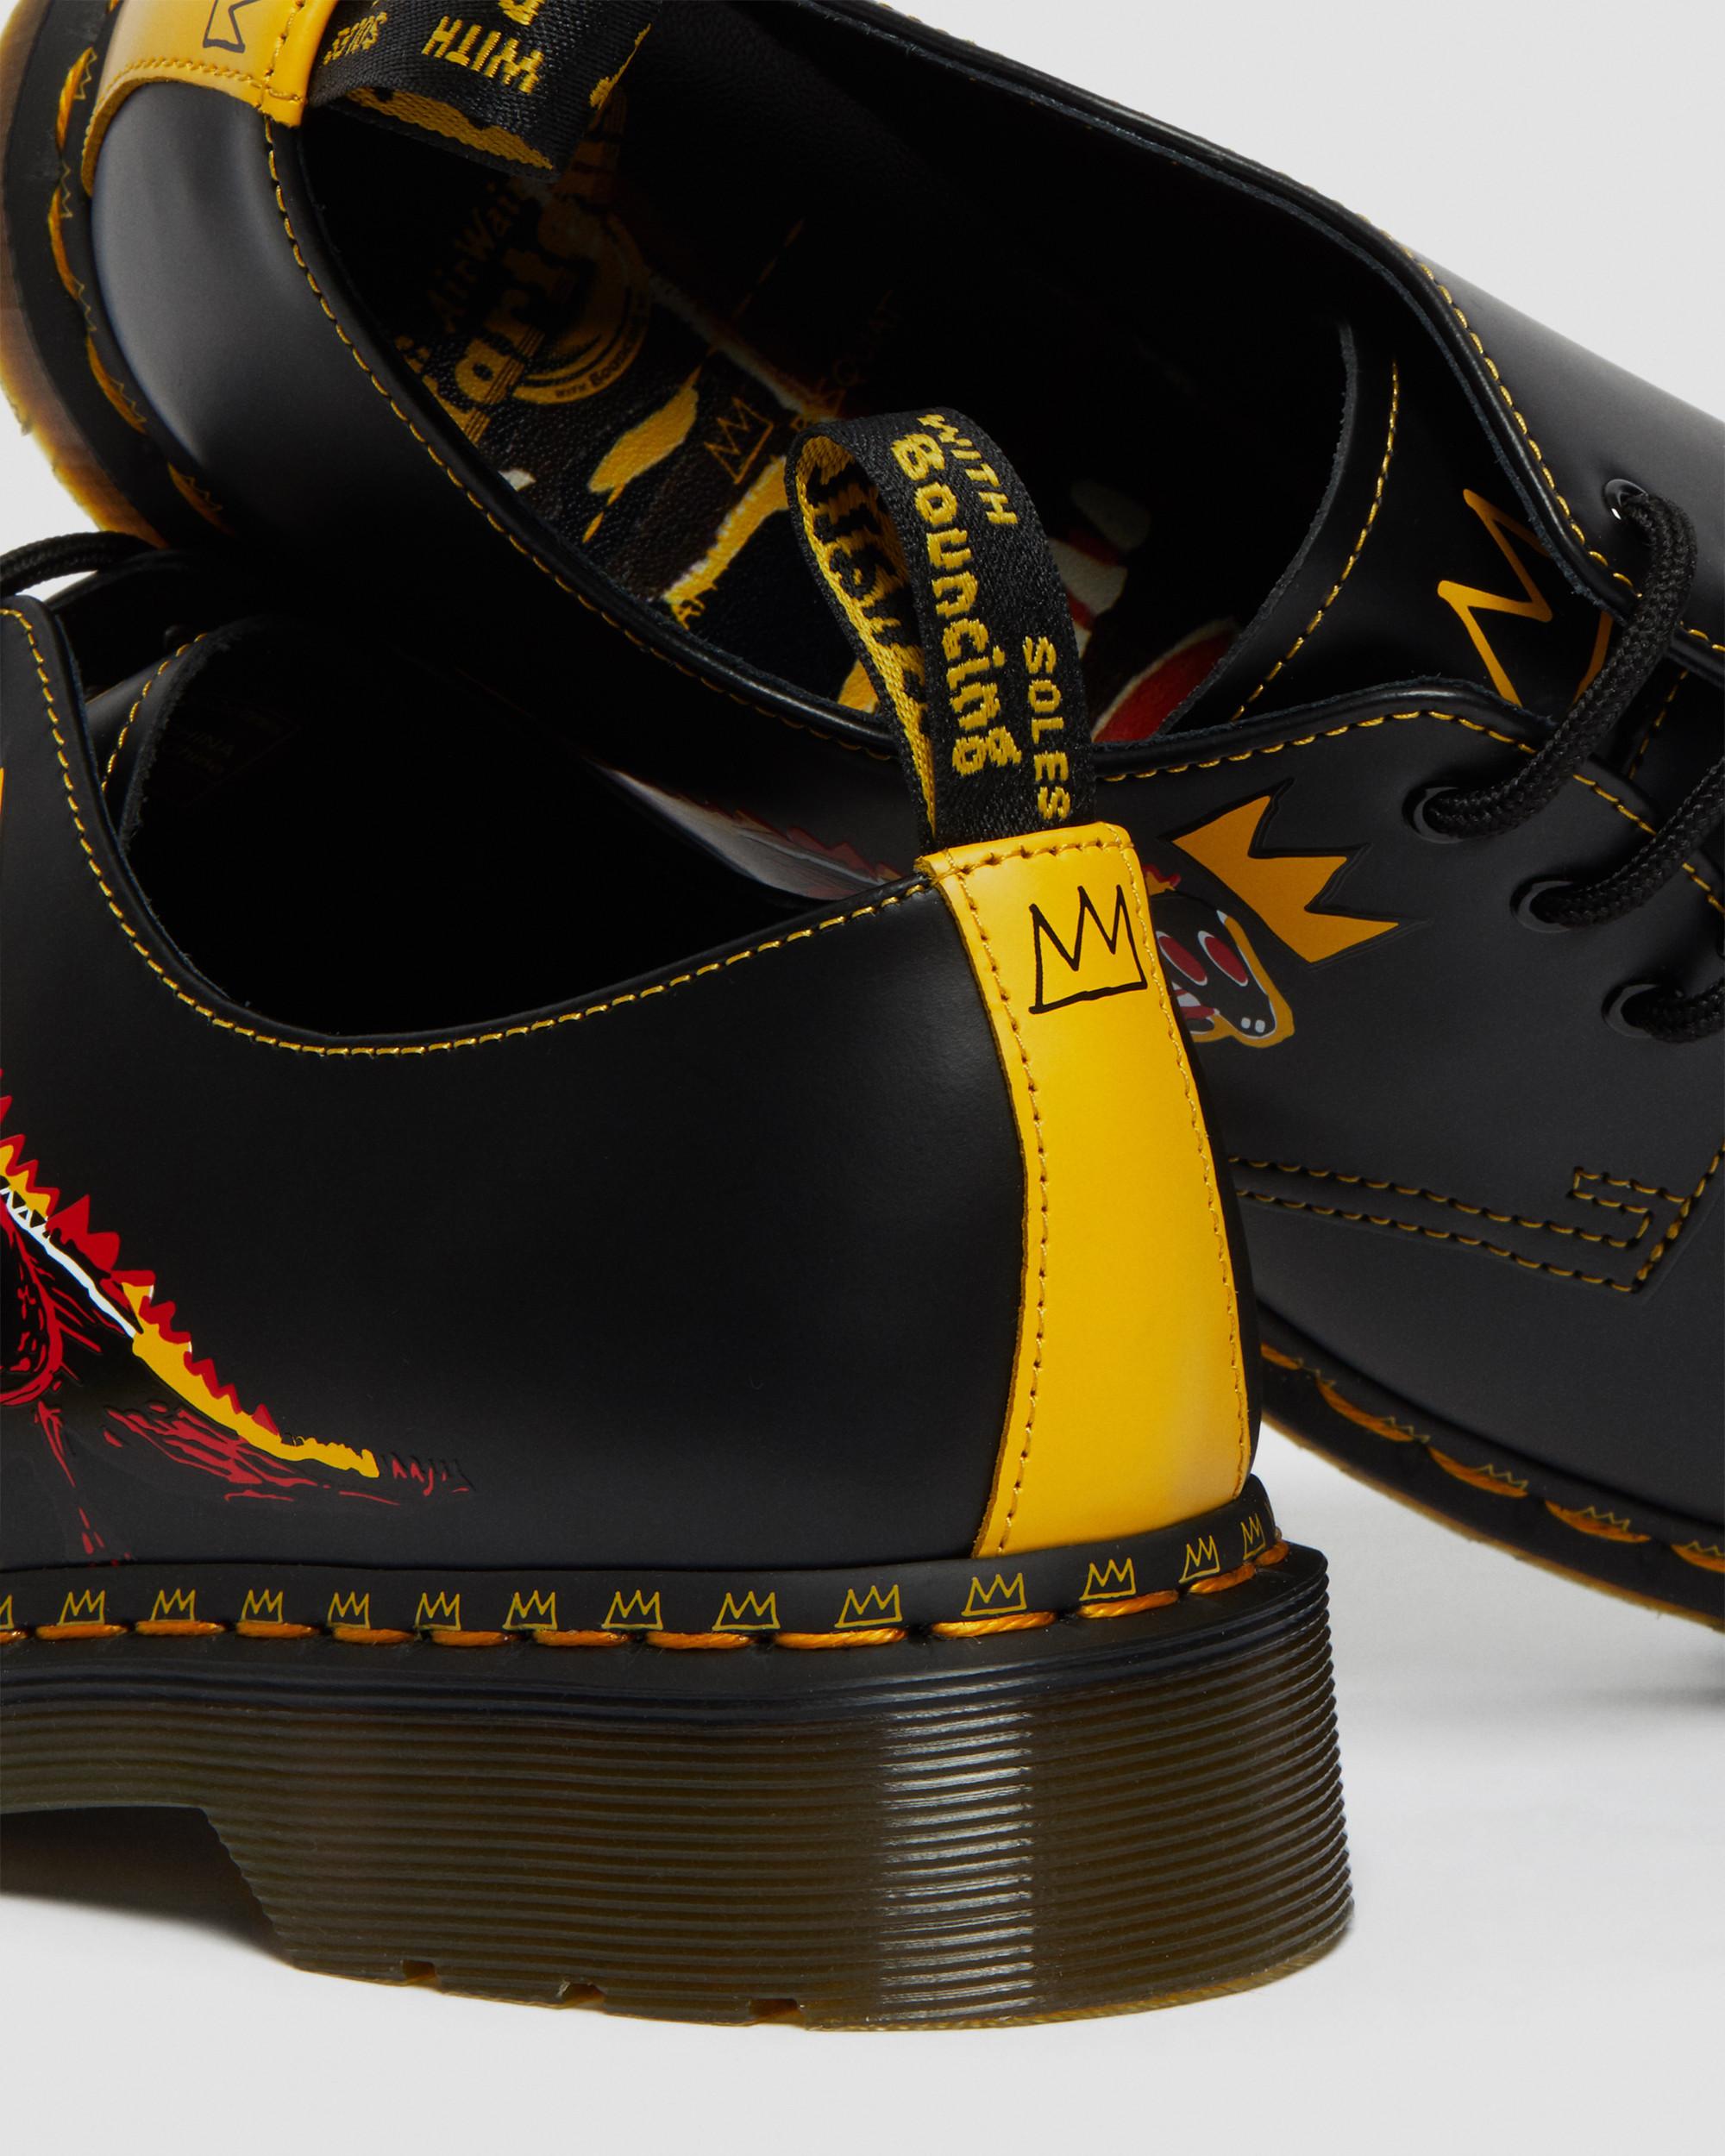 DR MARTENS 1461 Basquiat Leather Oxford Shoes​